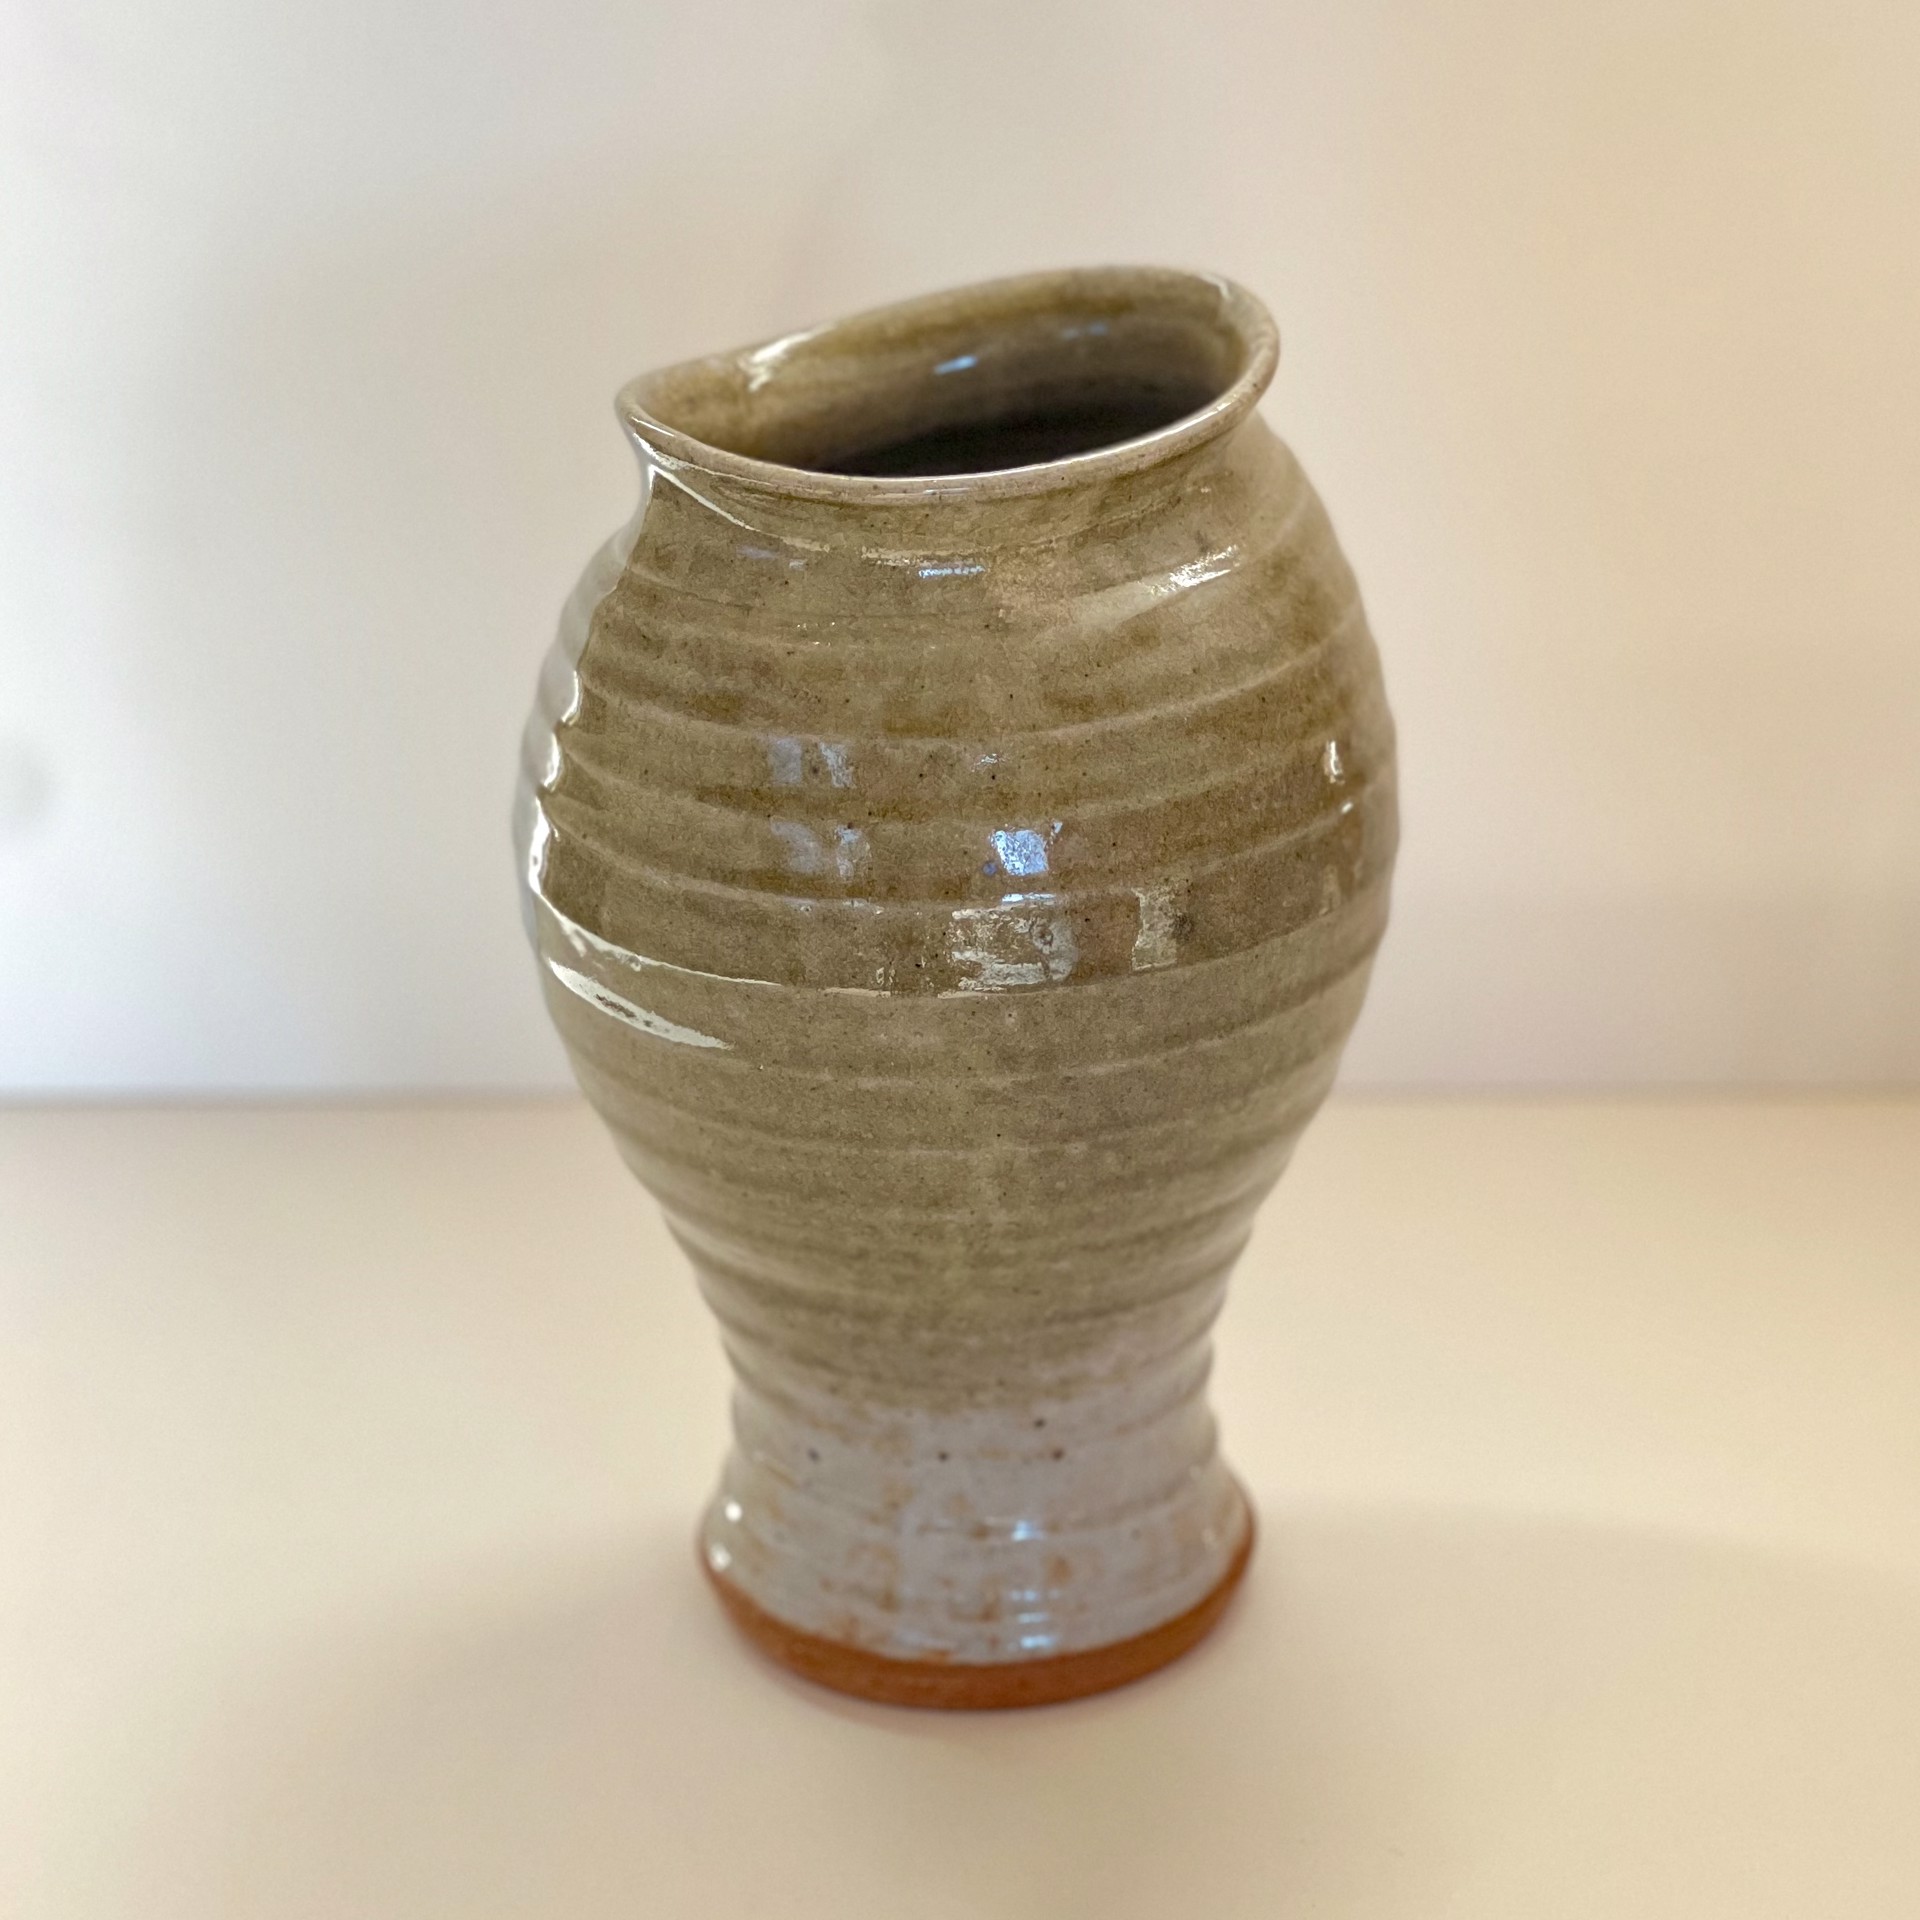 Vase 2 by David LaLomia